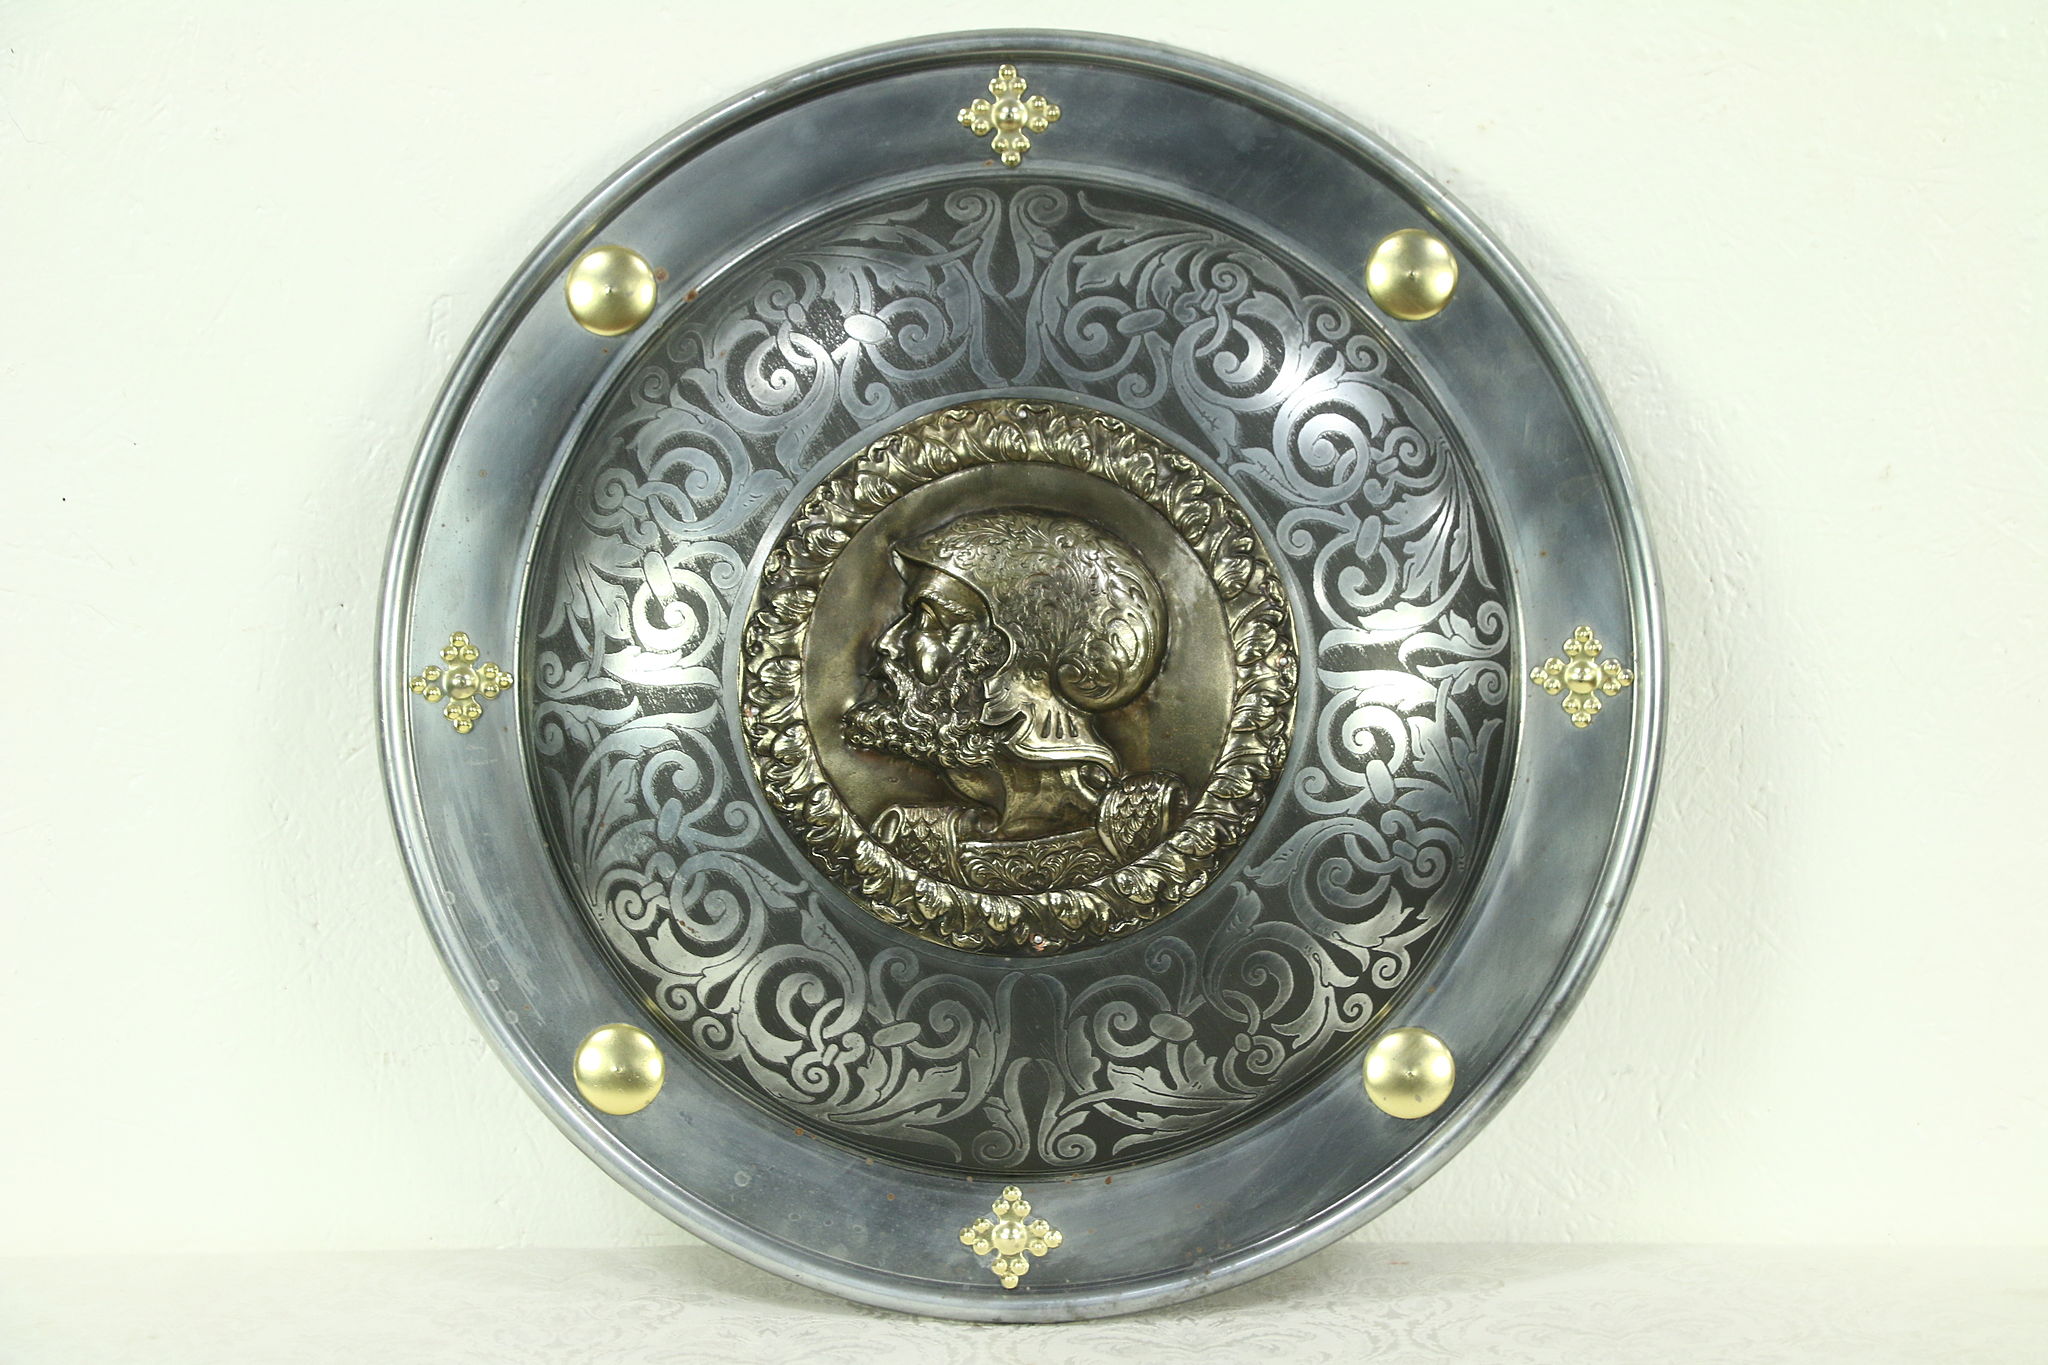 SOLD - Armor Shield, Engraved Steel, Brass Sculpture of Knight, Marto ...